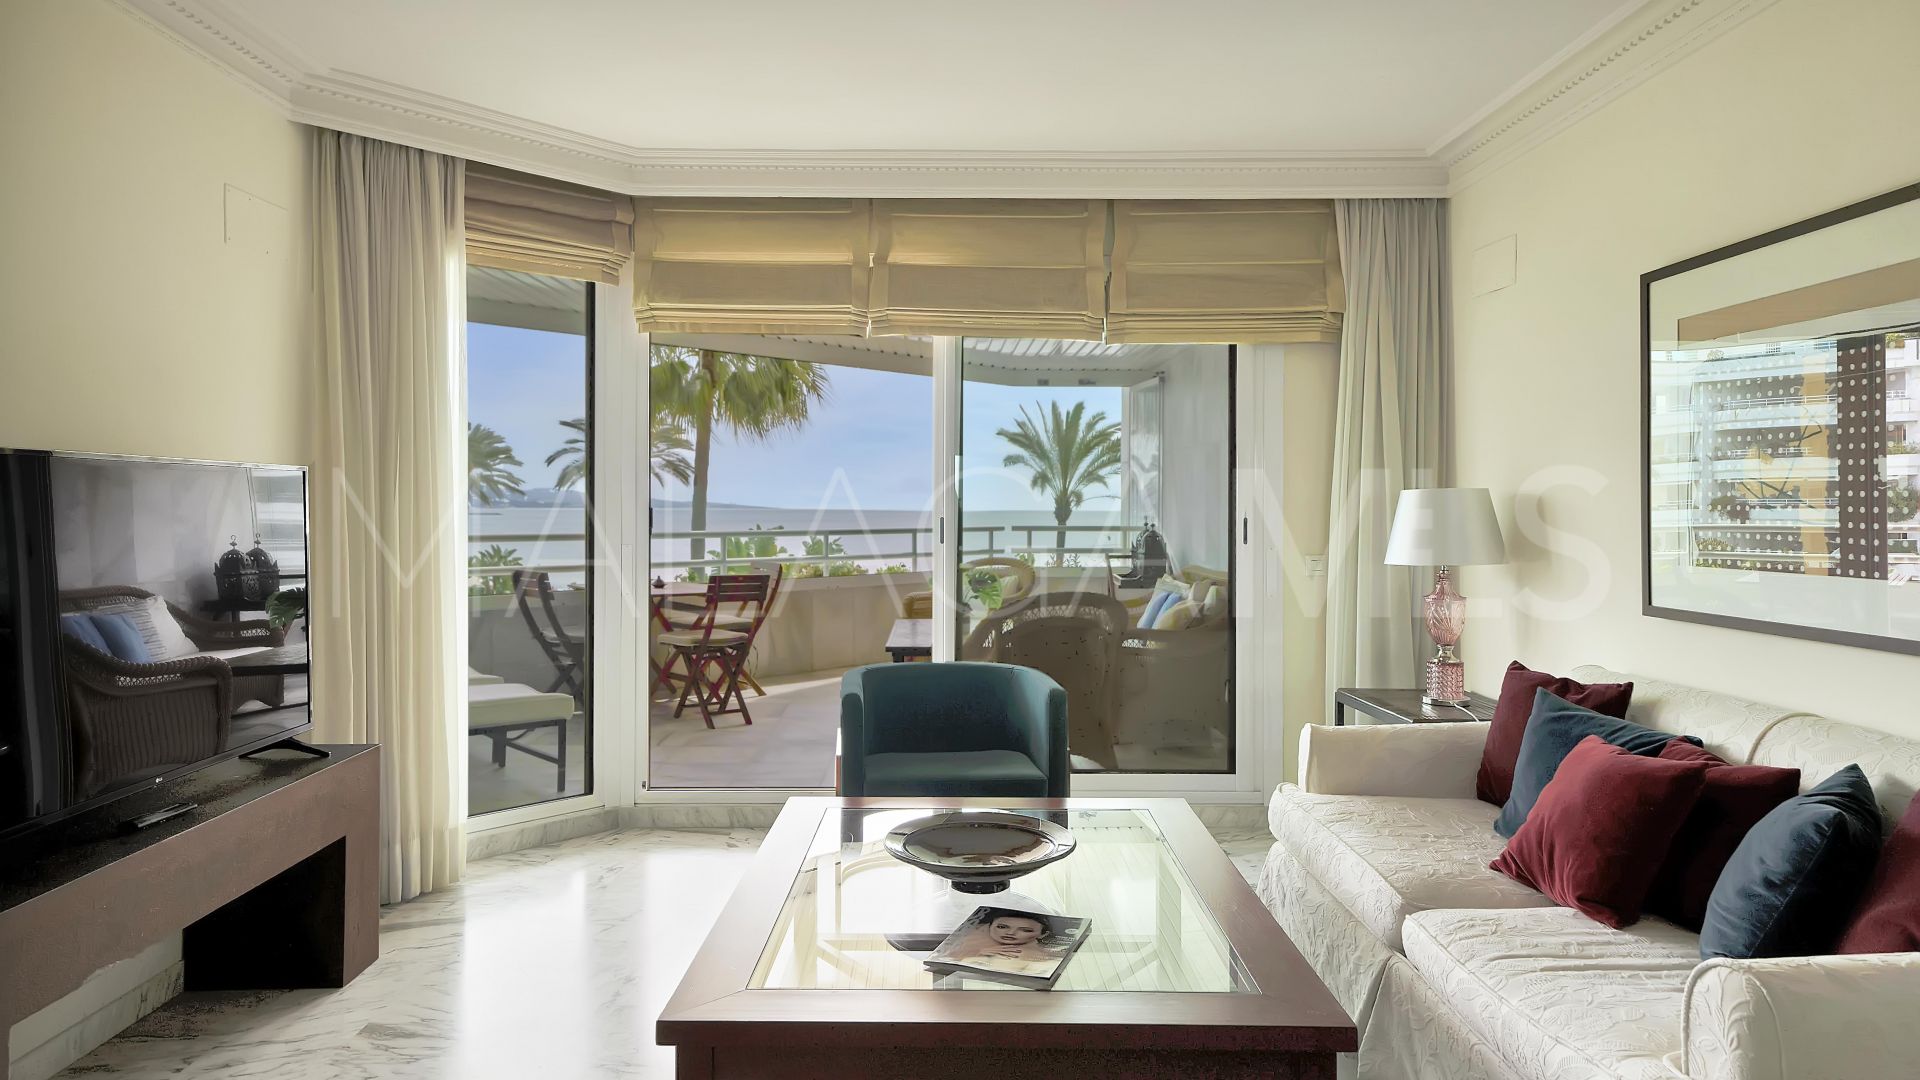 Apartment for sale in Playa Esmeralda with 2 bedrooms